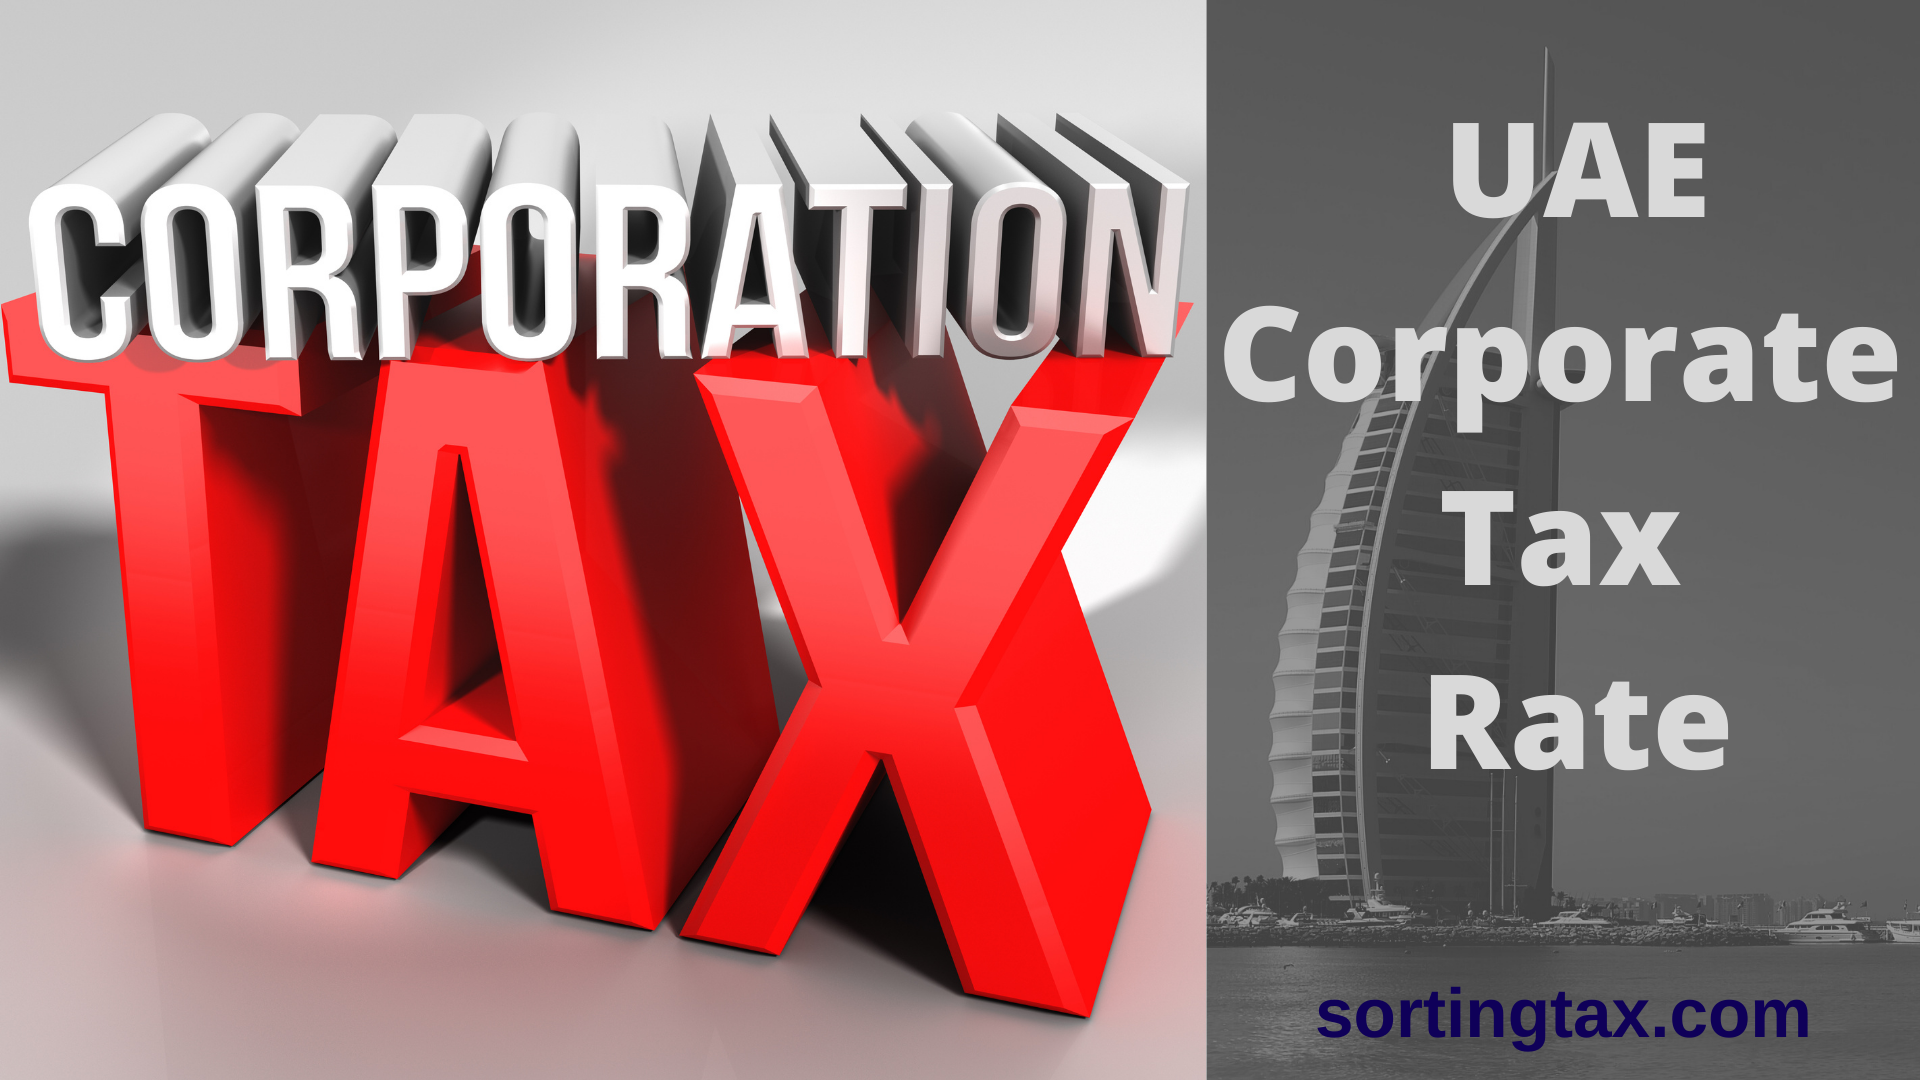 United Arab Emirates Uae Corporate Tax Rate Sorting Tax 4929